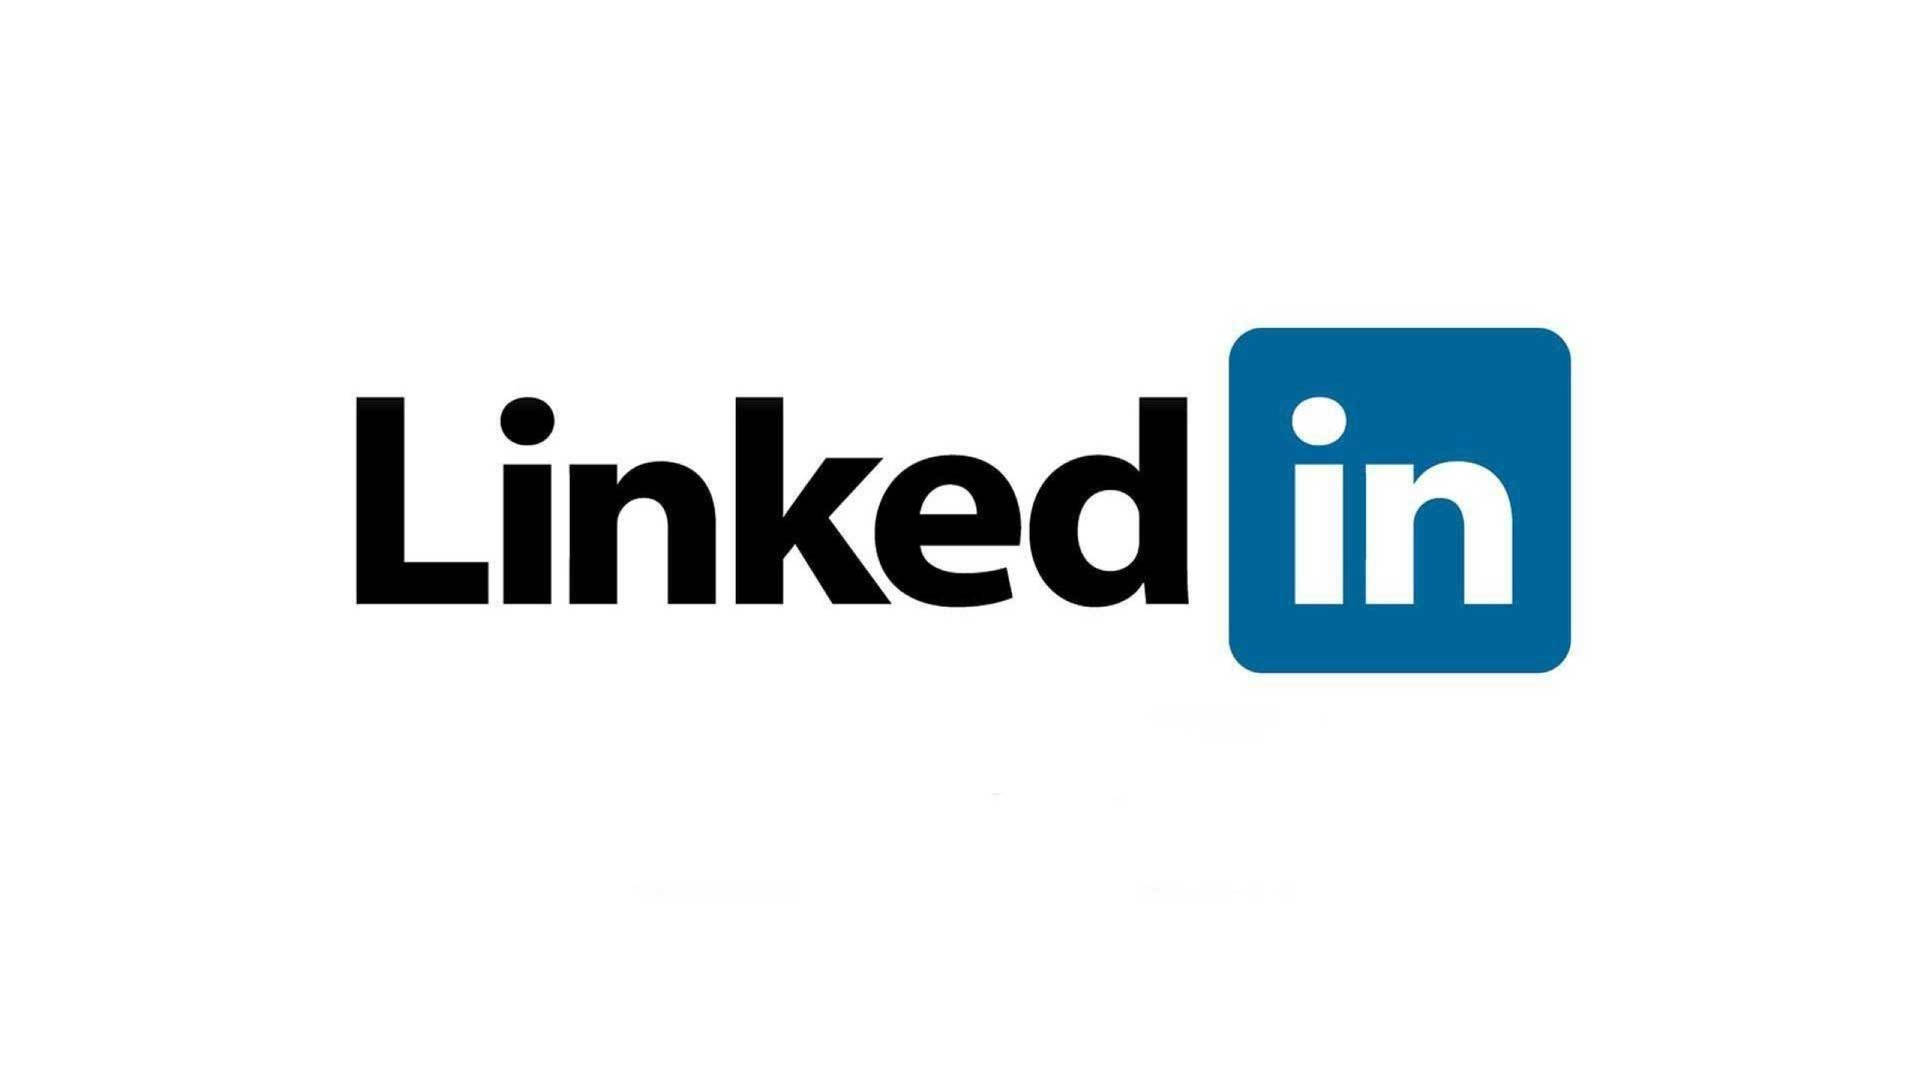 LinkedIn Original Logo Wallpaper